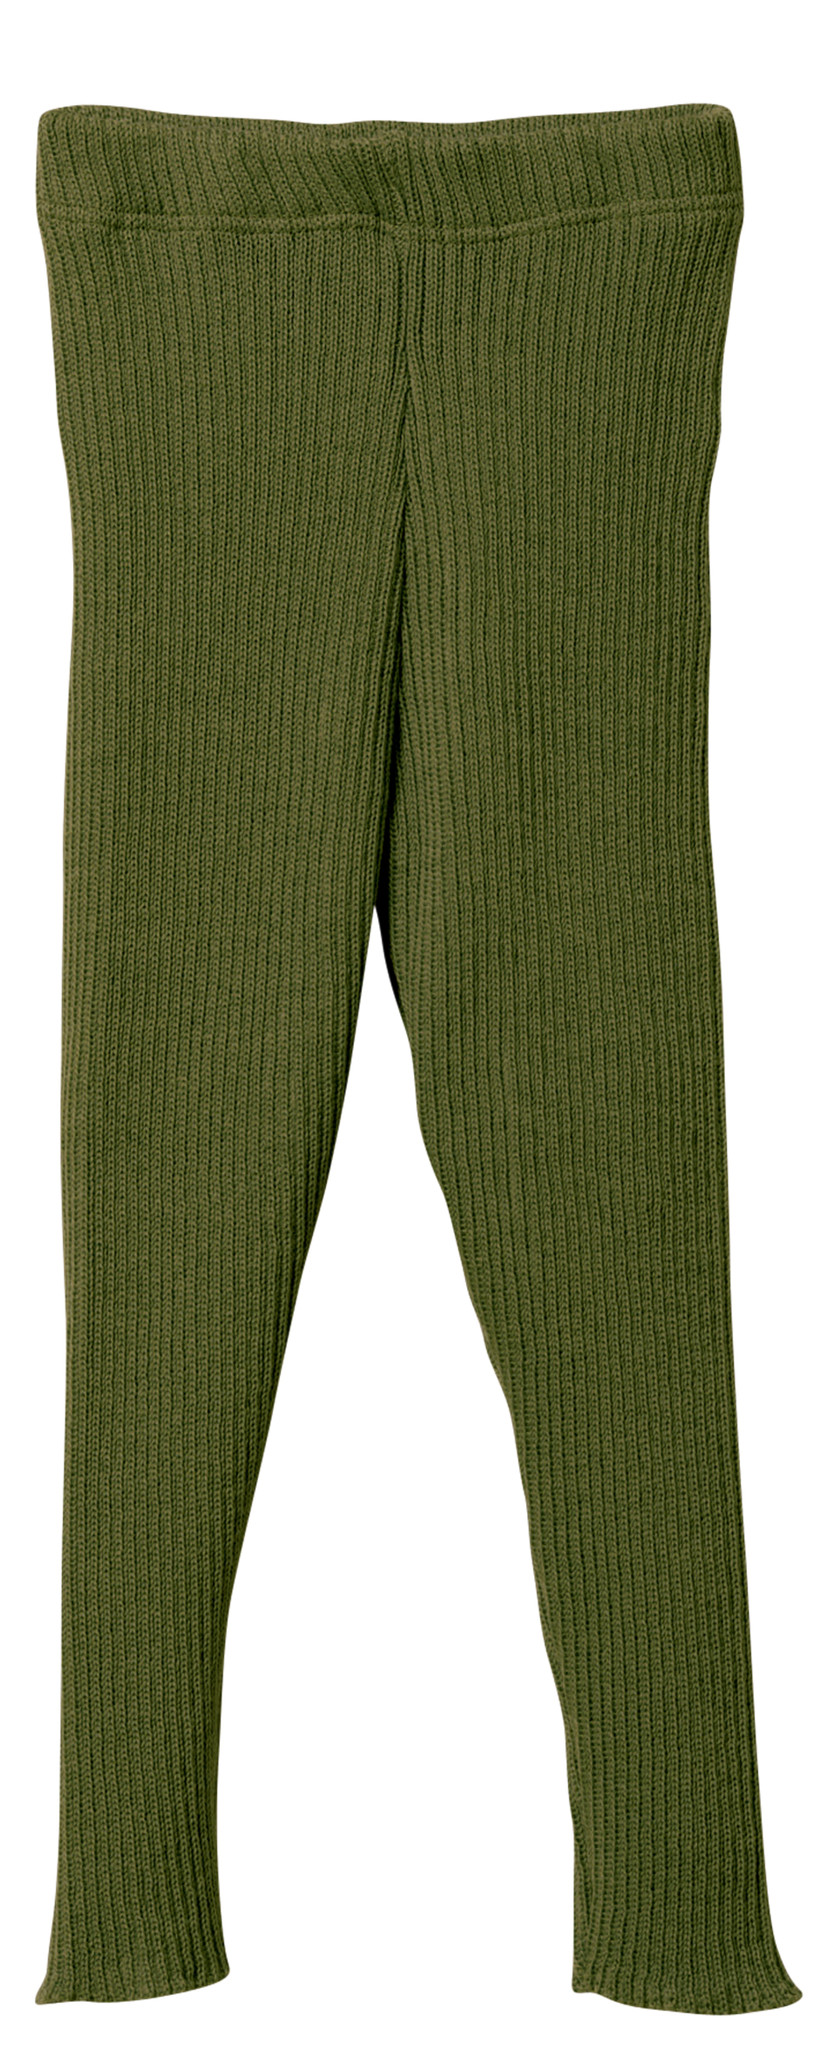 Merino Wool Leggings - Diaper Covers - Thick double layered